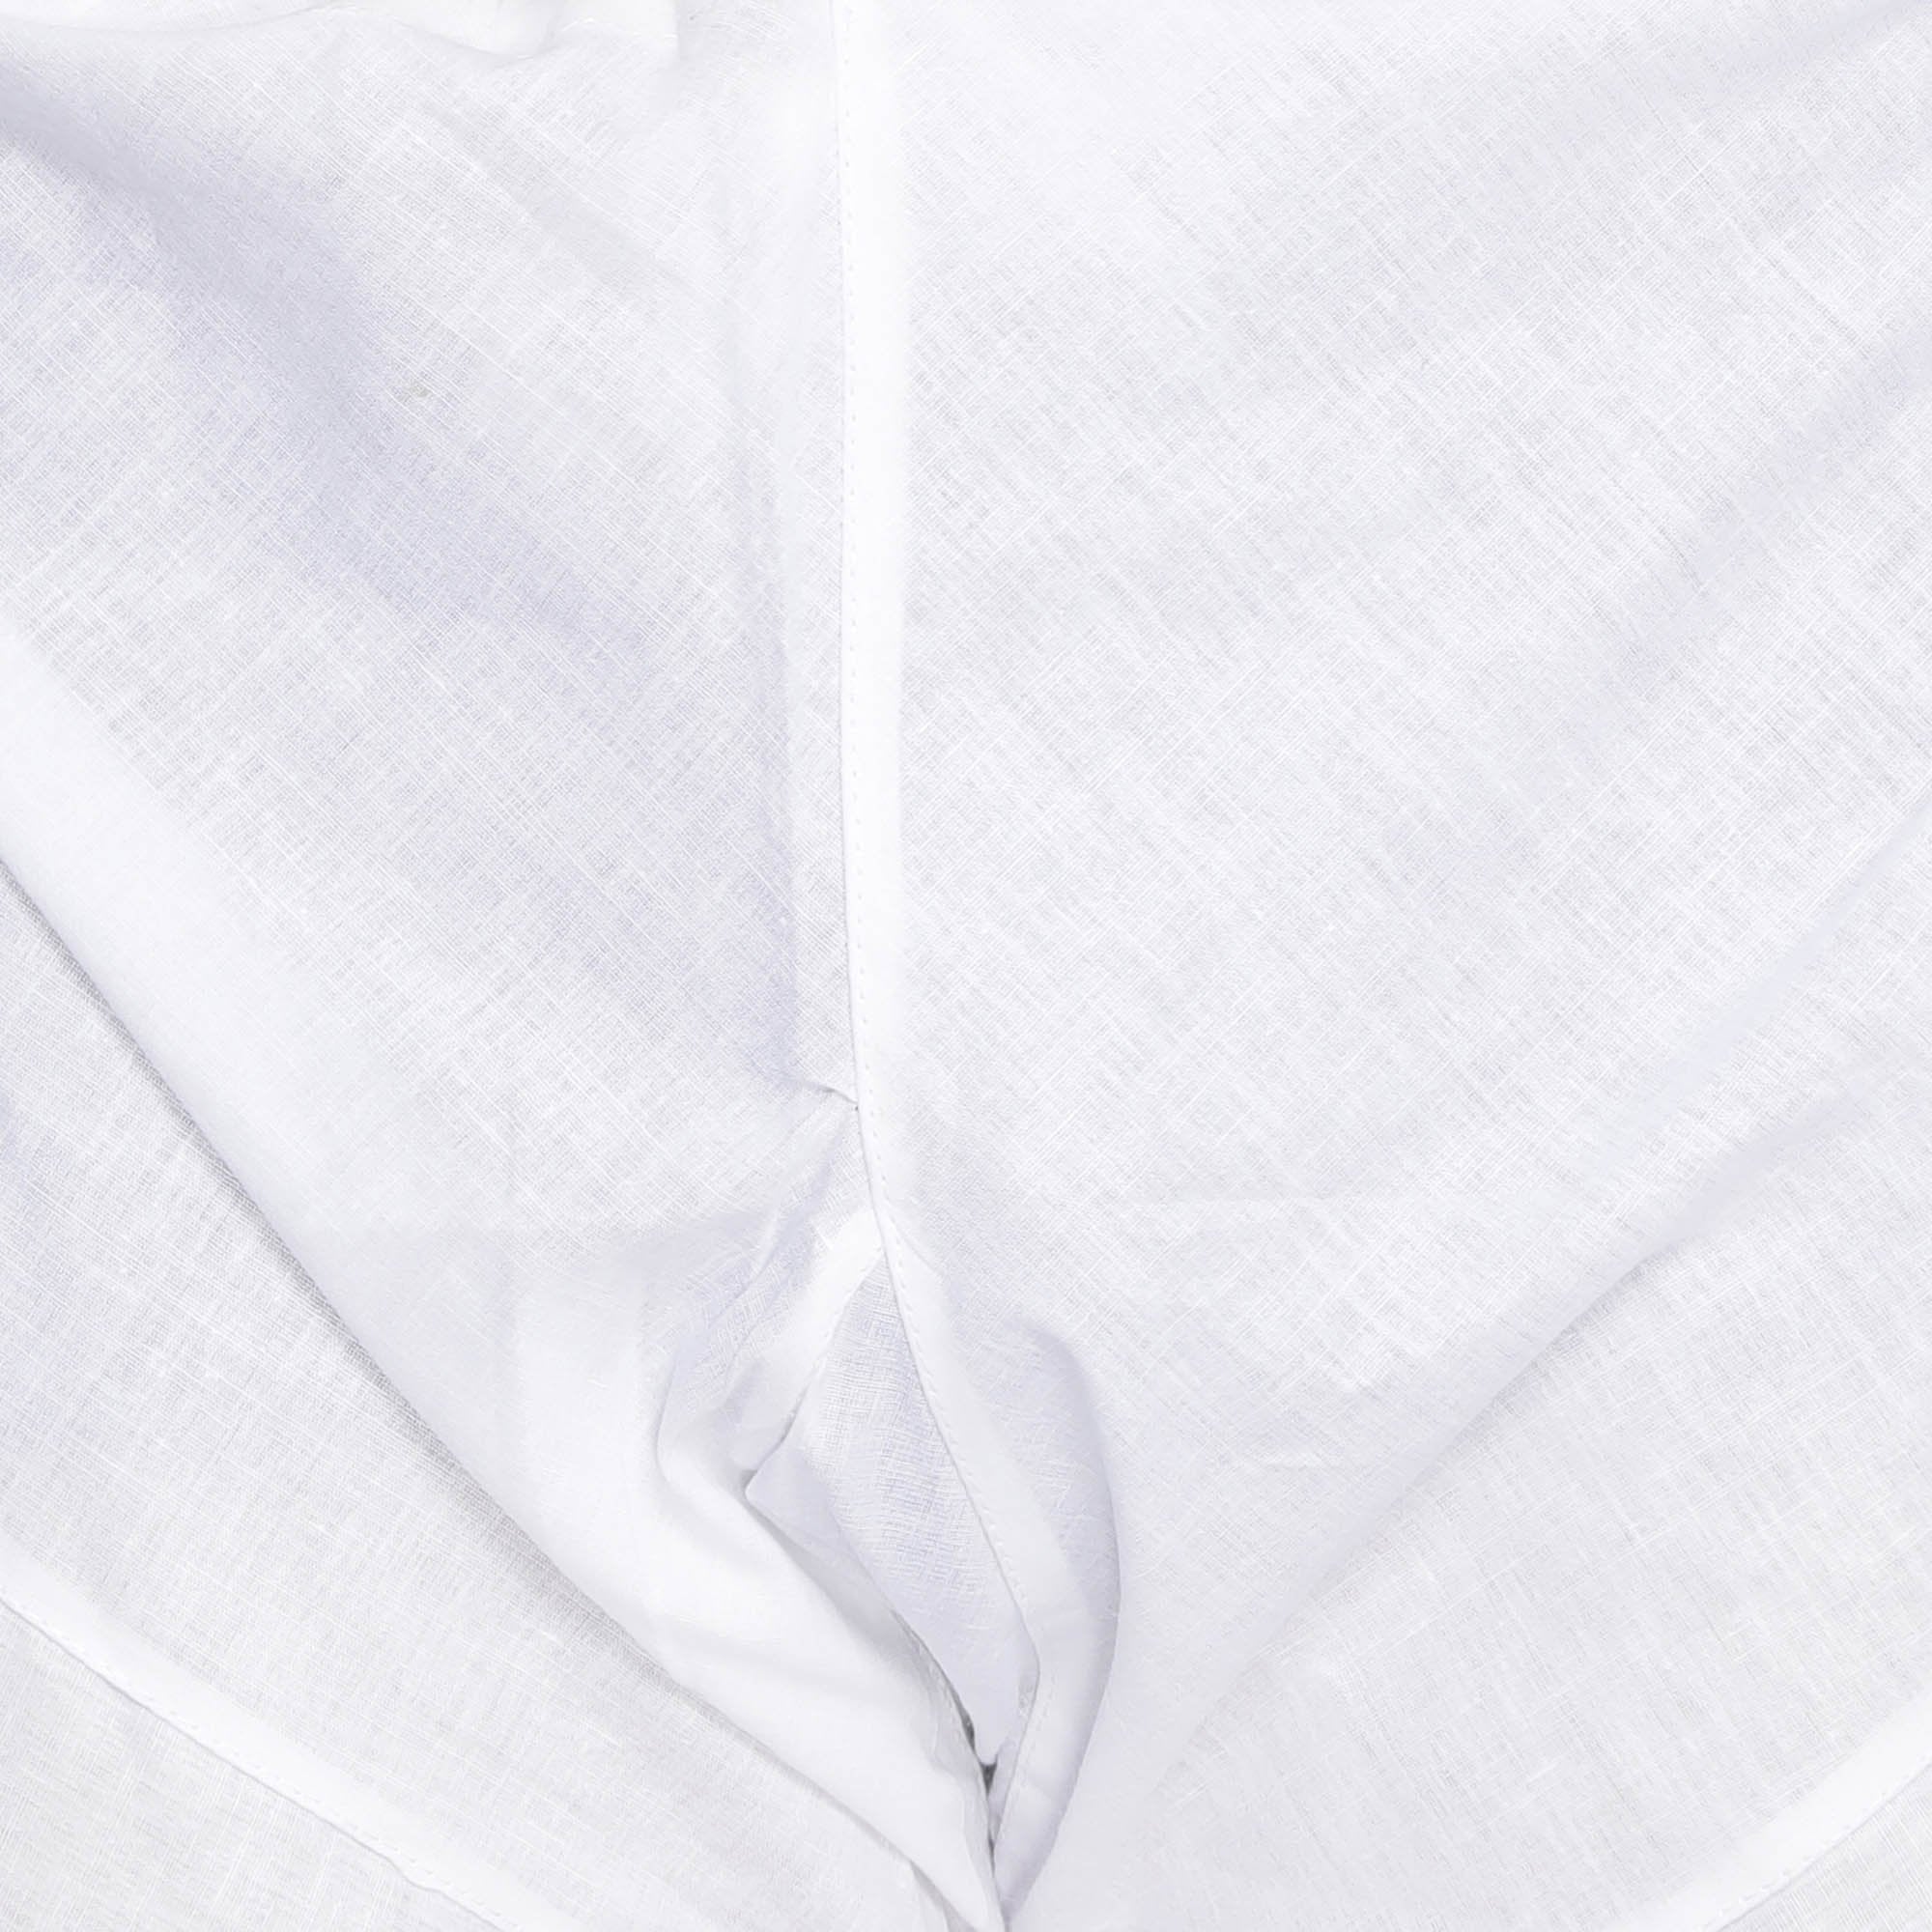 Men's Purple Cotton Linen Blend Kurta and Pyjama Set - Vastramay